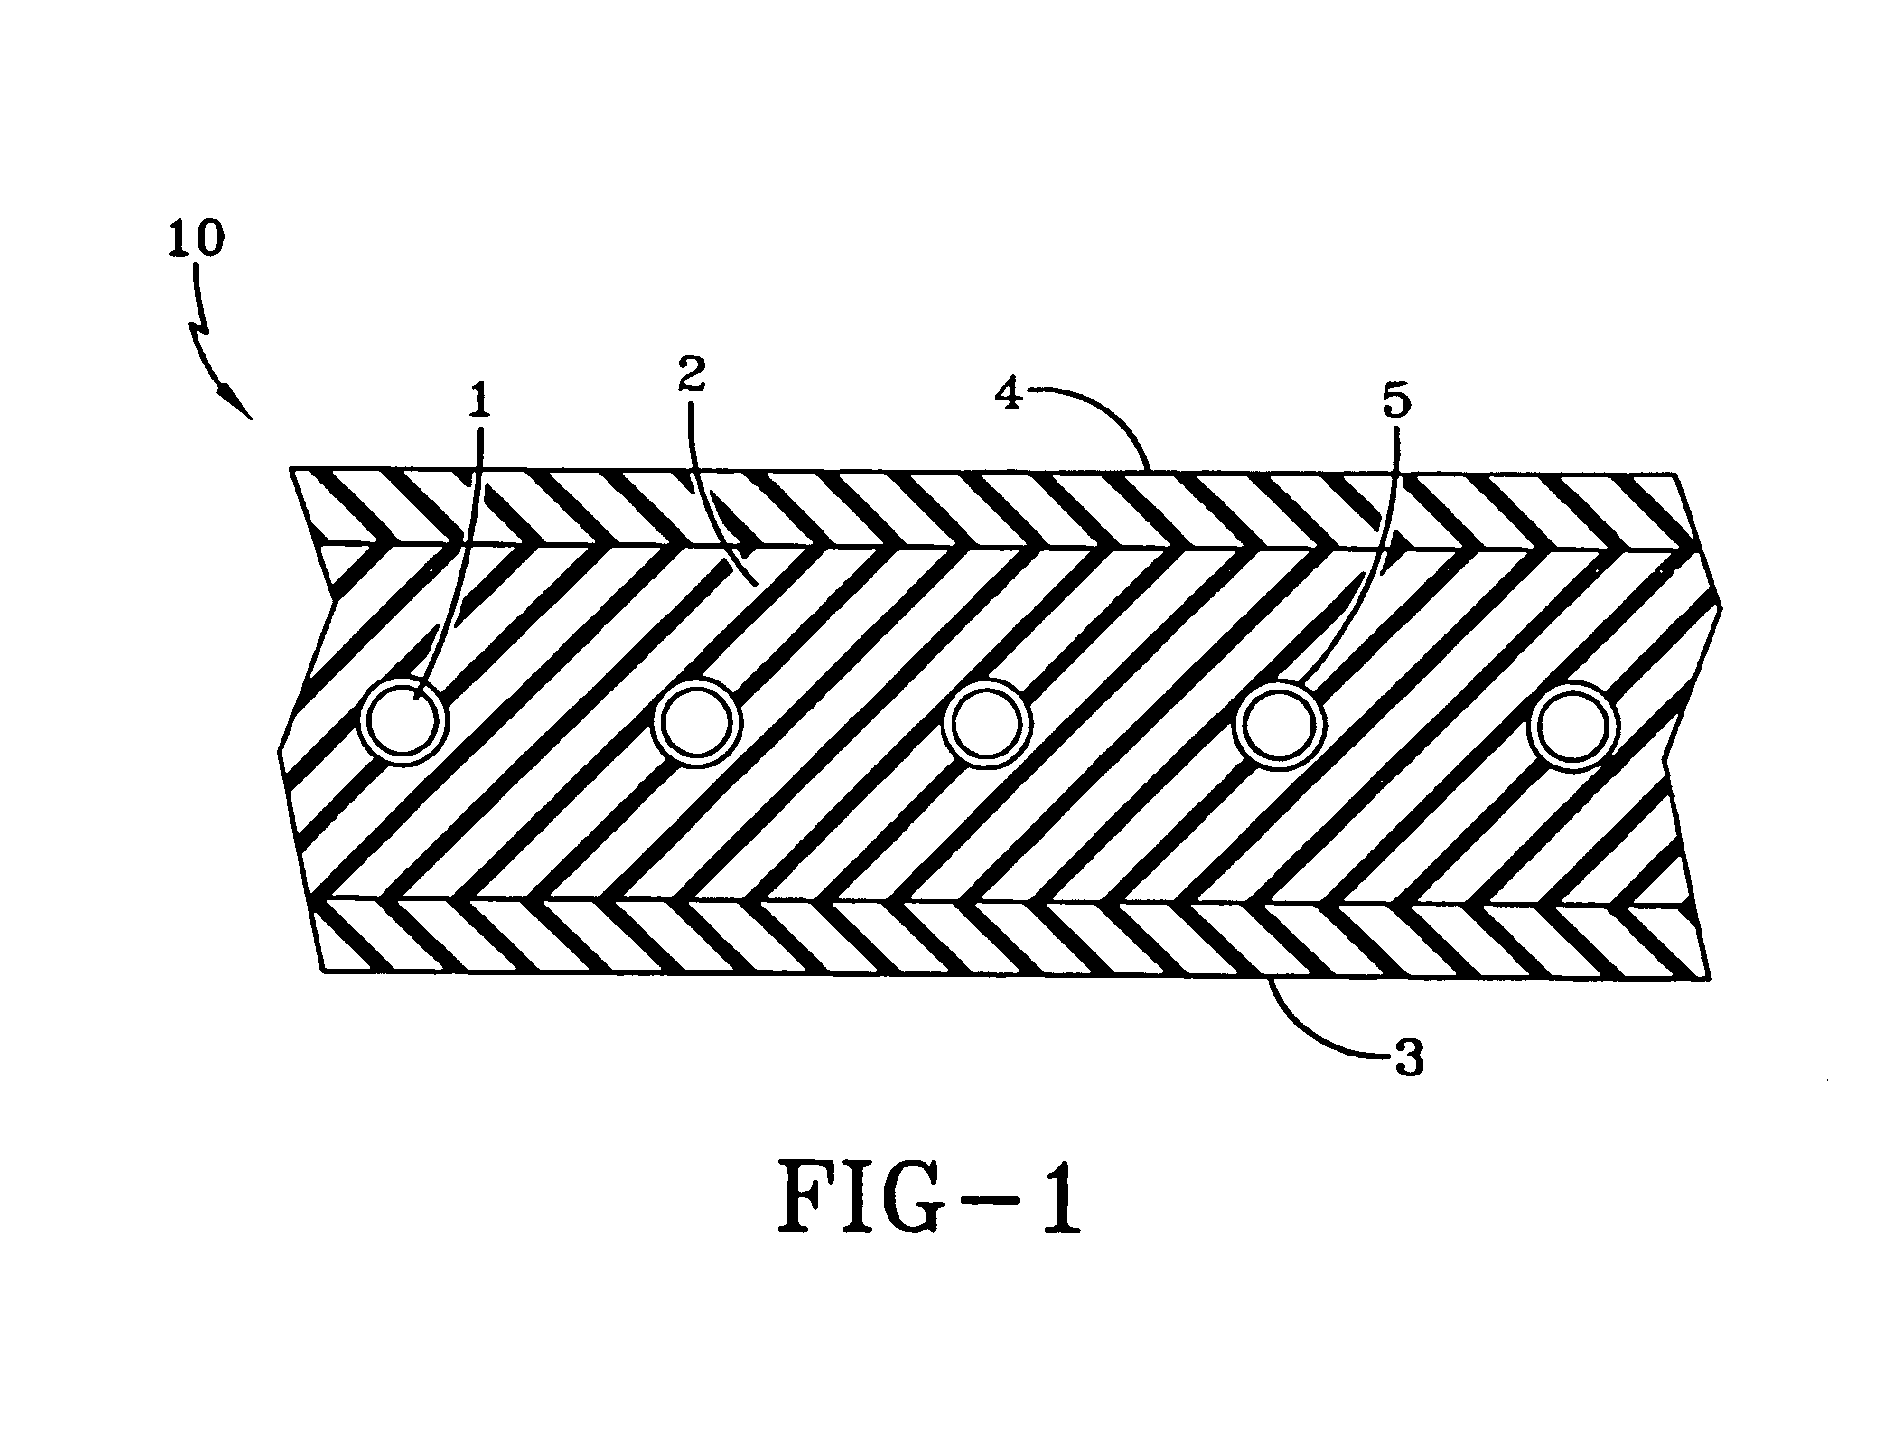 Method for splicing a conveyor belt